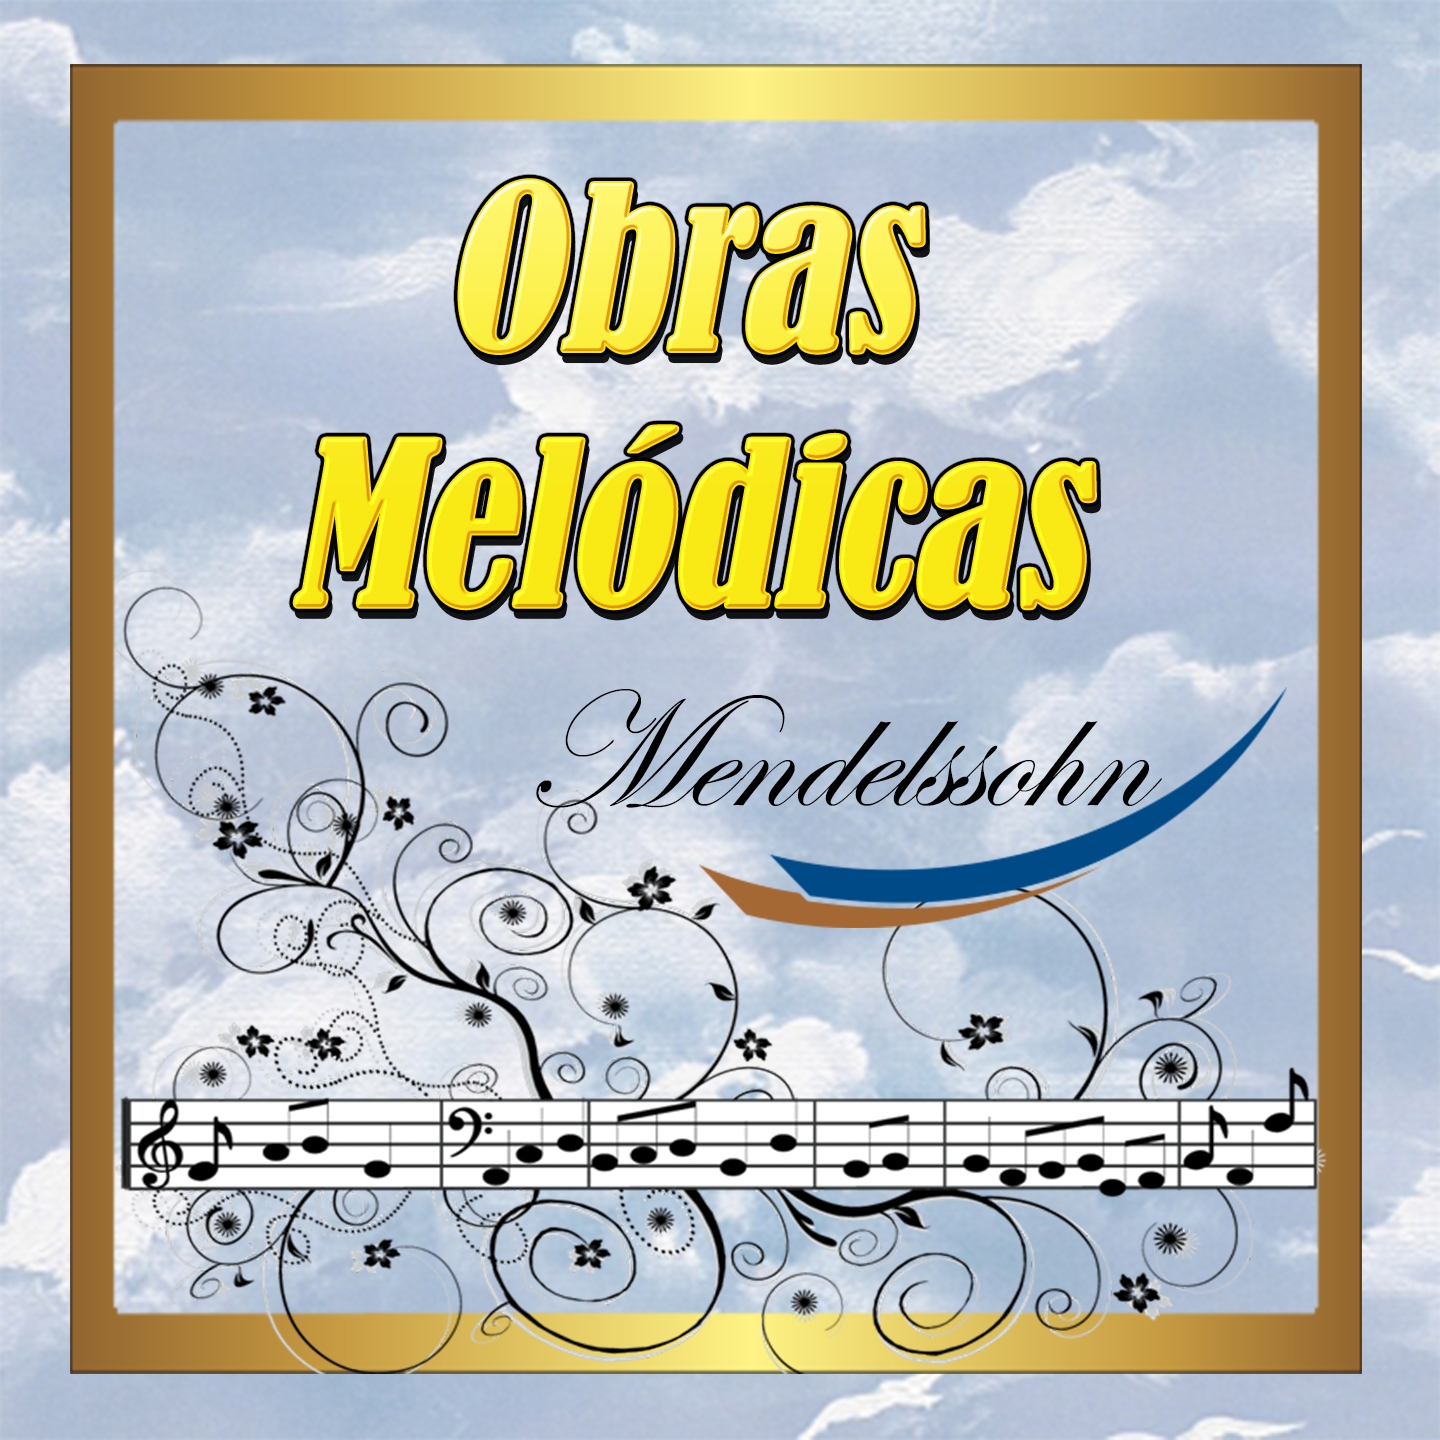 Obras Melo dicas, Mendelssohn